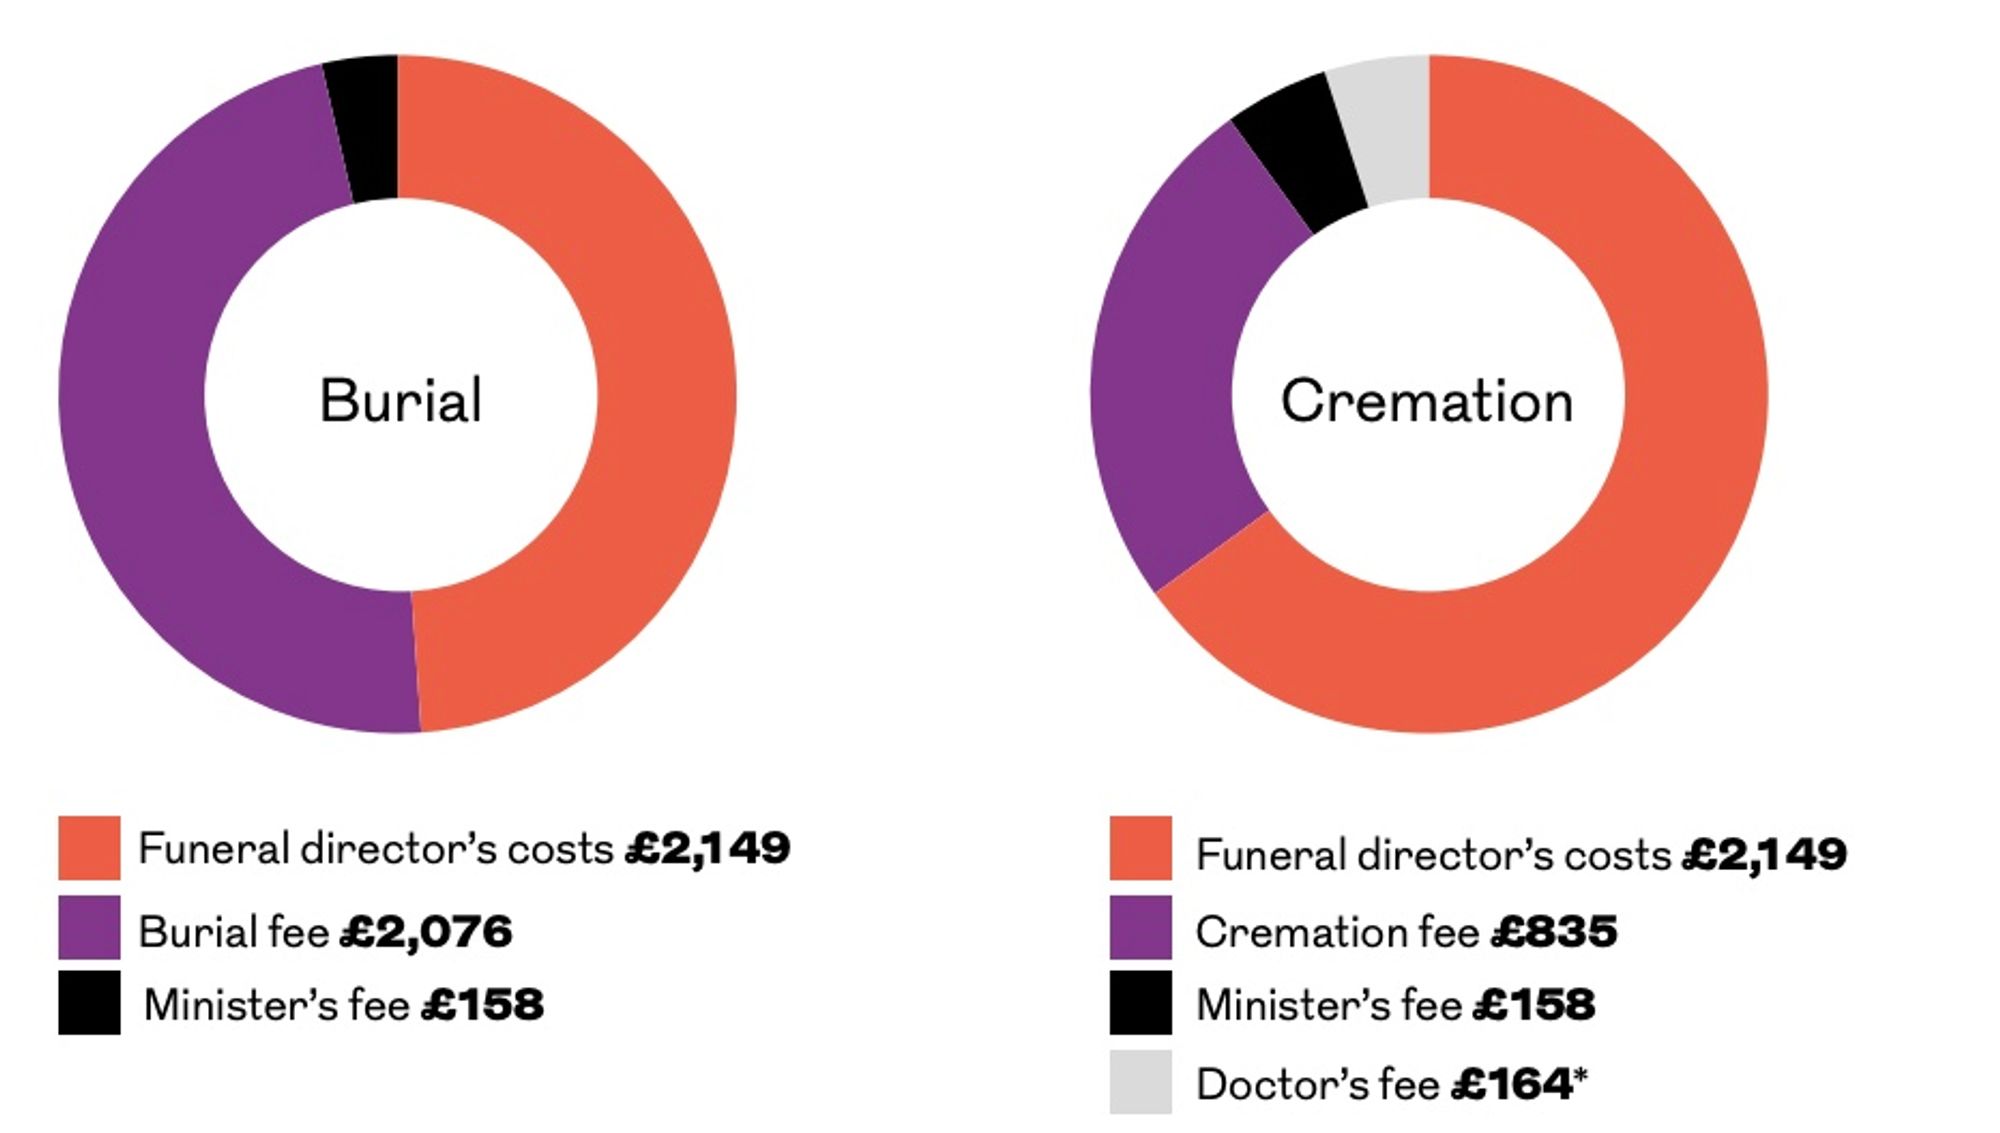 Source: Royal London National Funeral Cost Index surveys